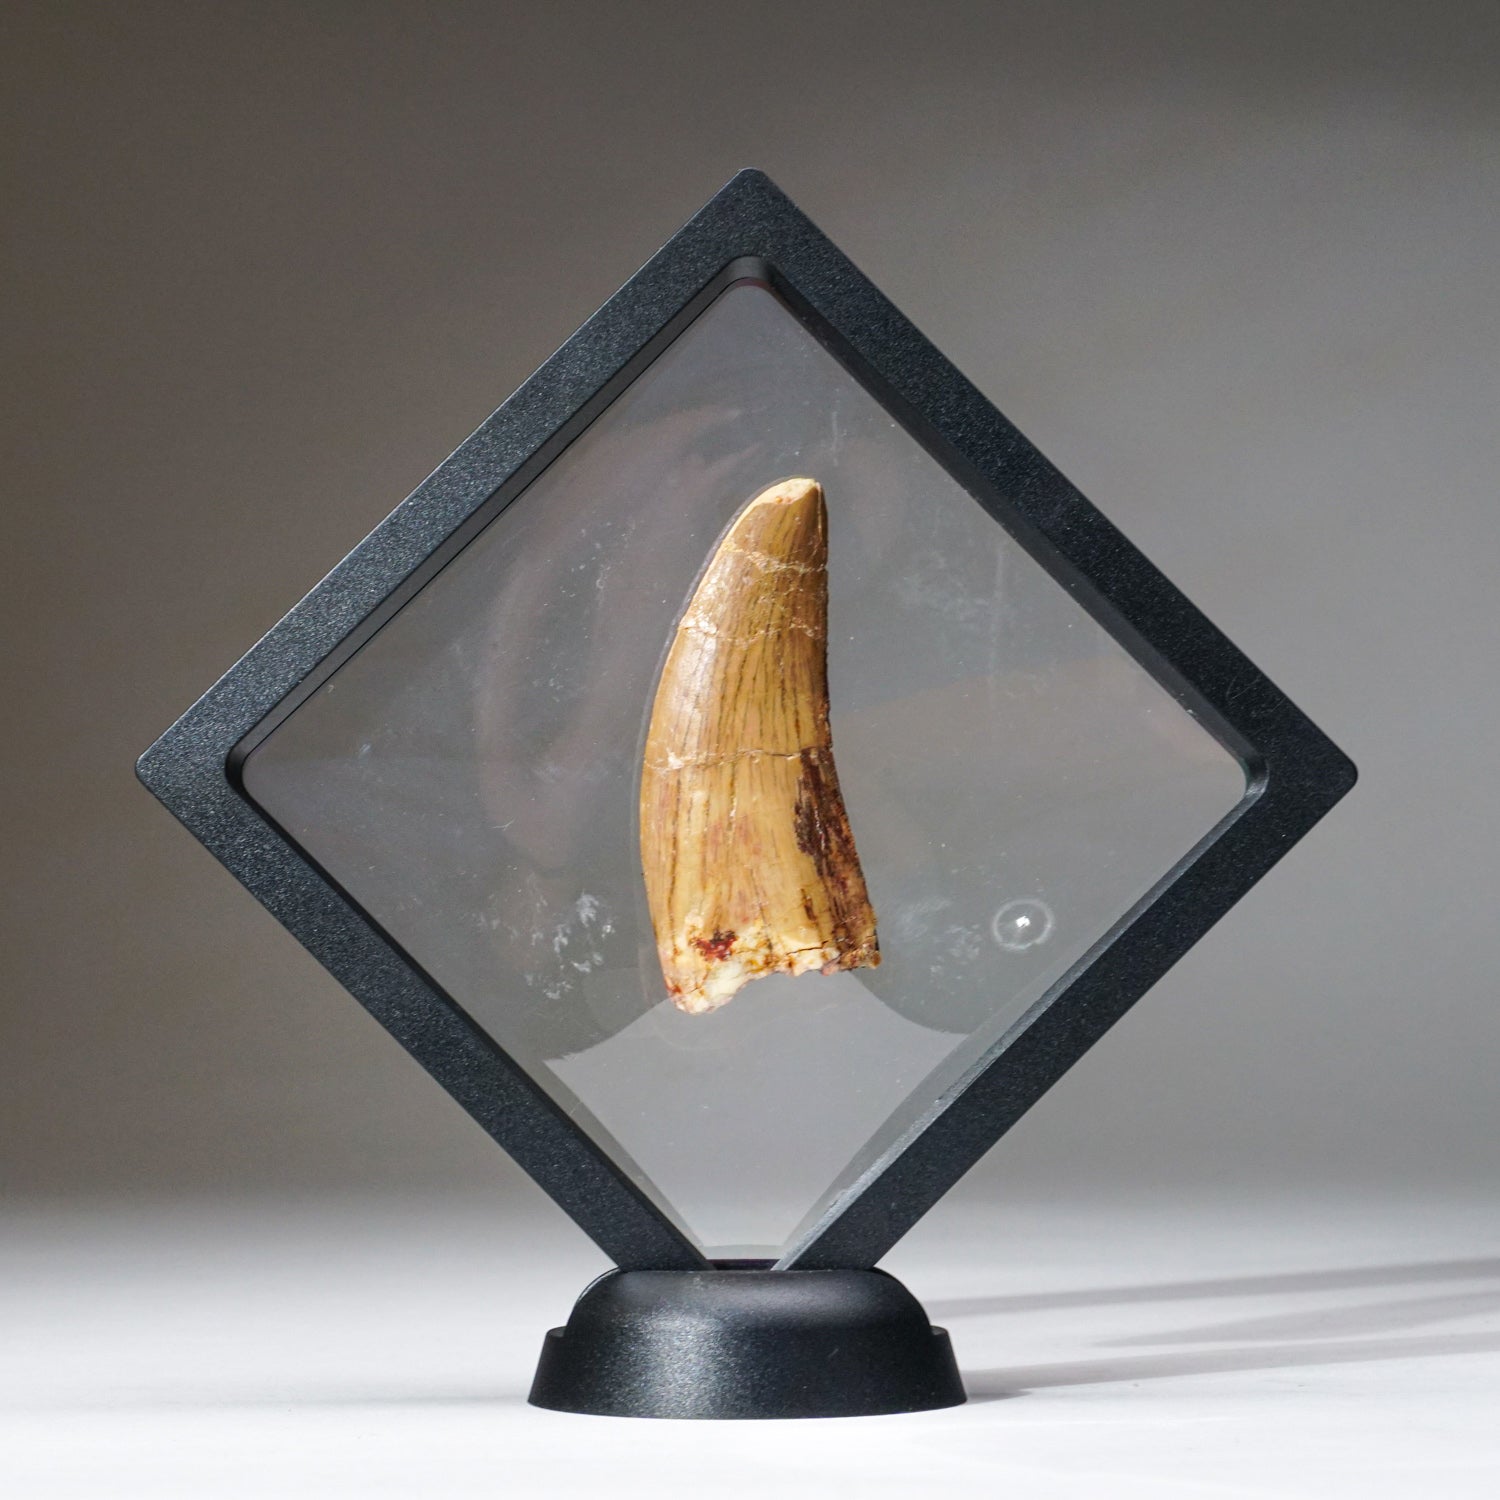 Genuine Carcharodontosaurus Tooth in Display Box (22.8 grams)